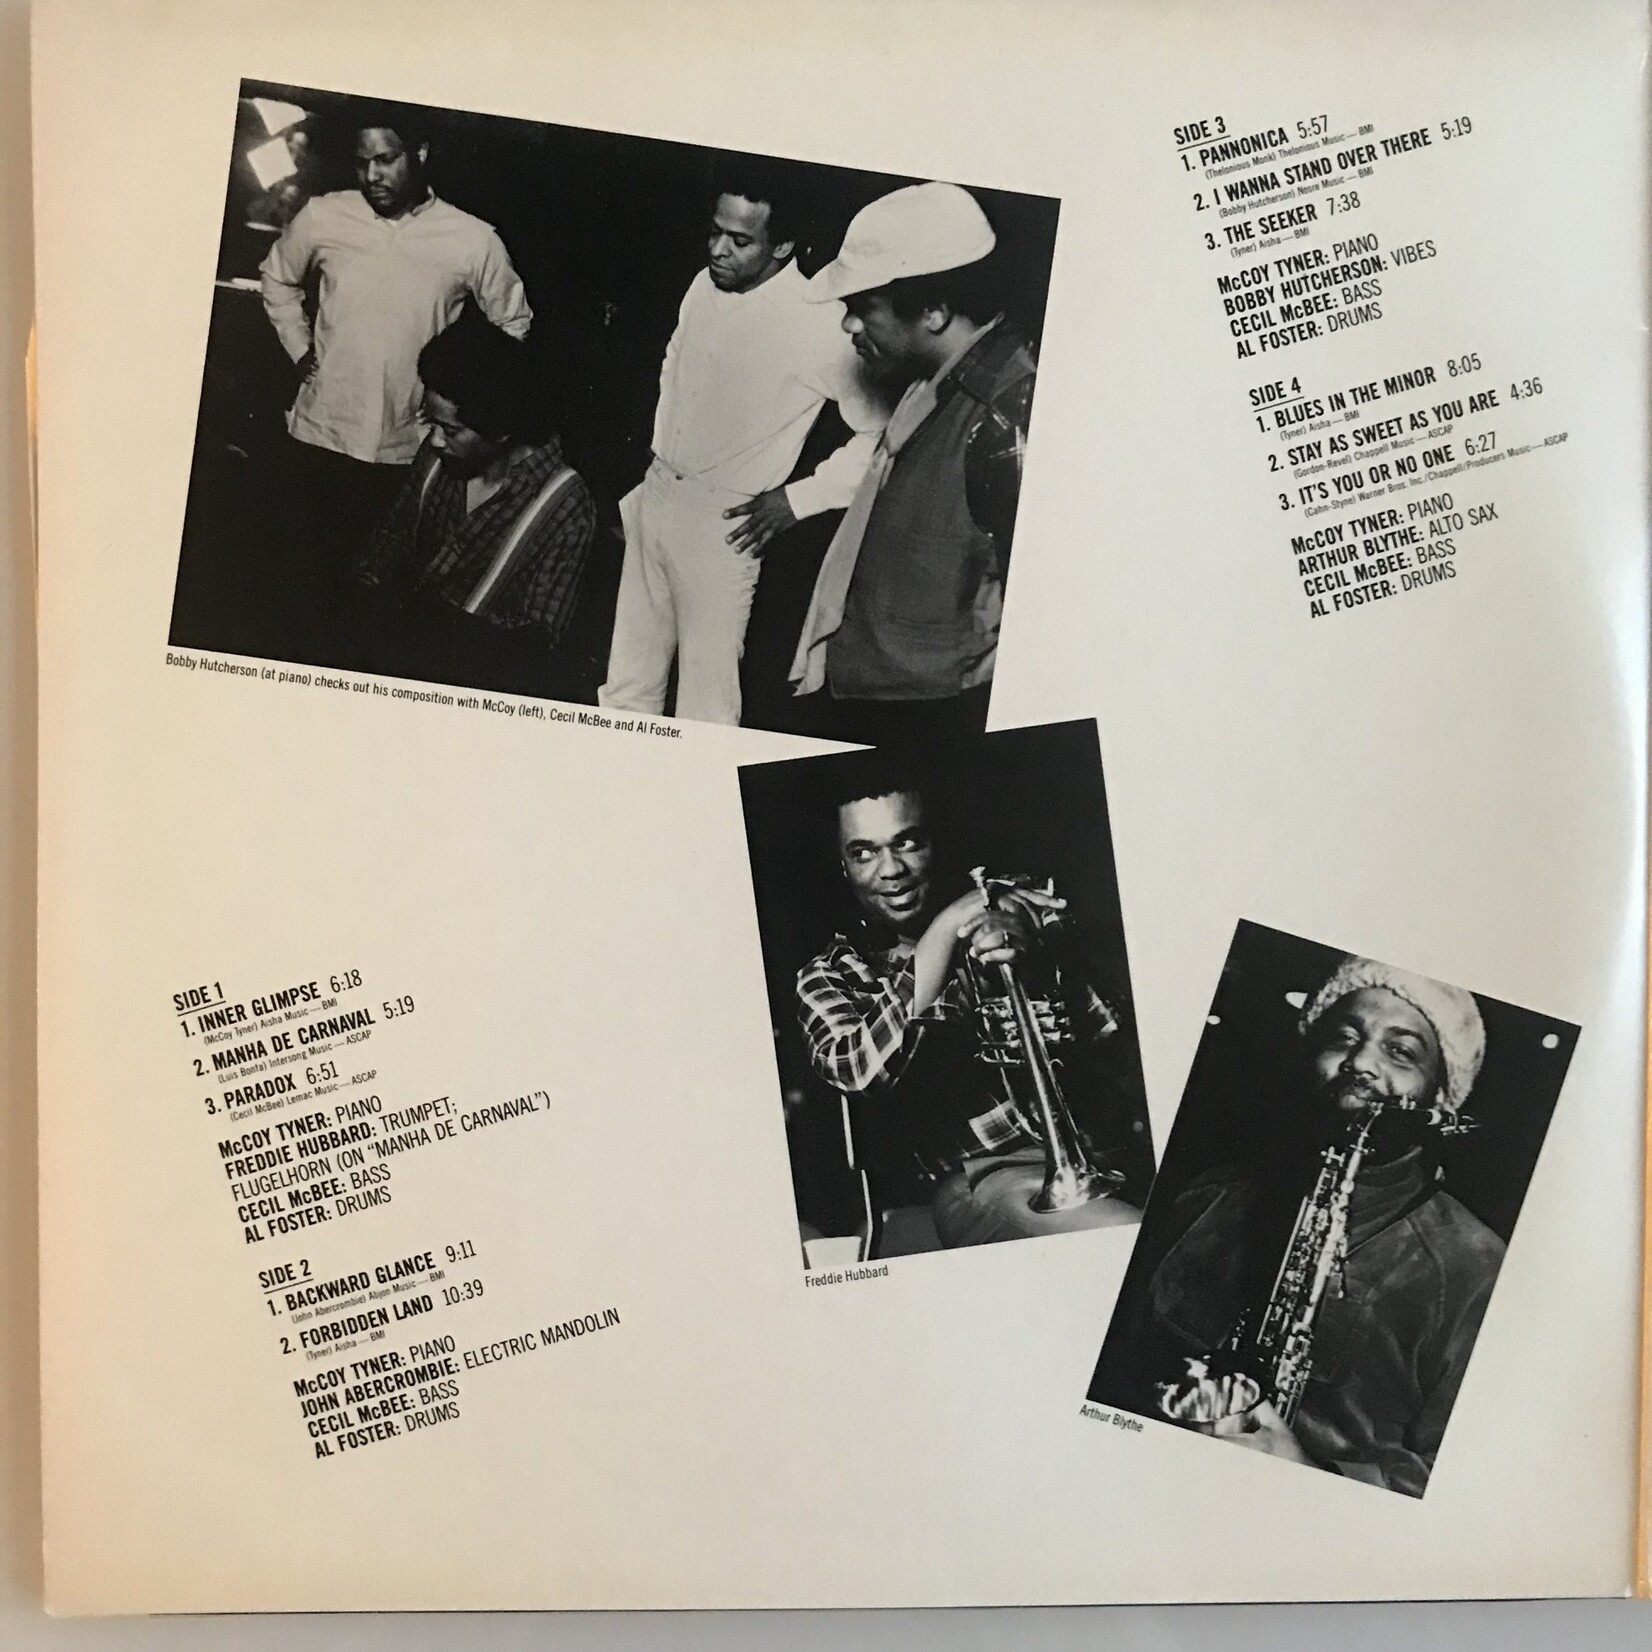 McCoy Tyner Quartets - 4x4 - Vinyl LP (USED)